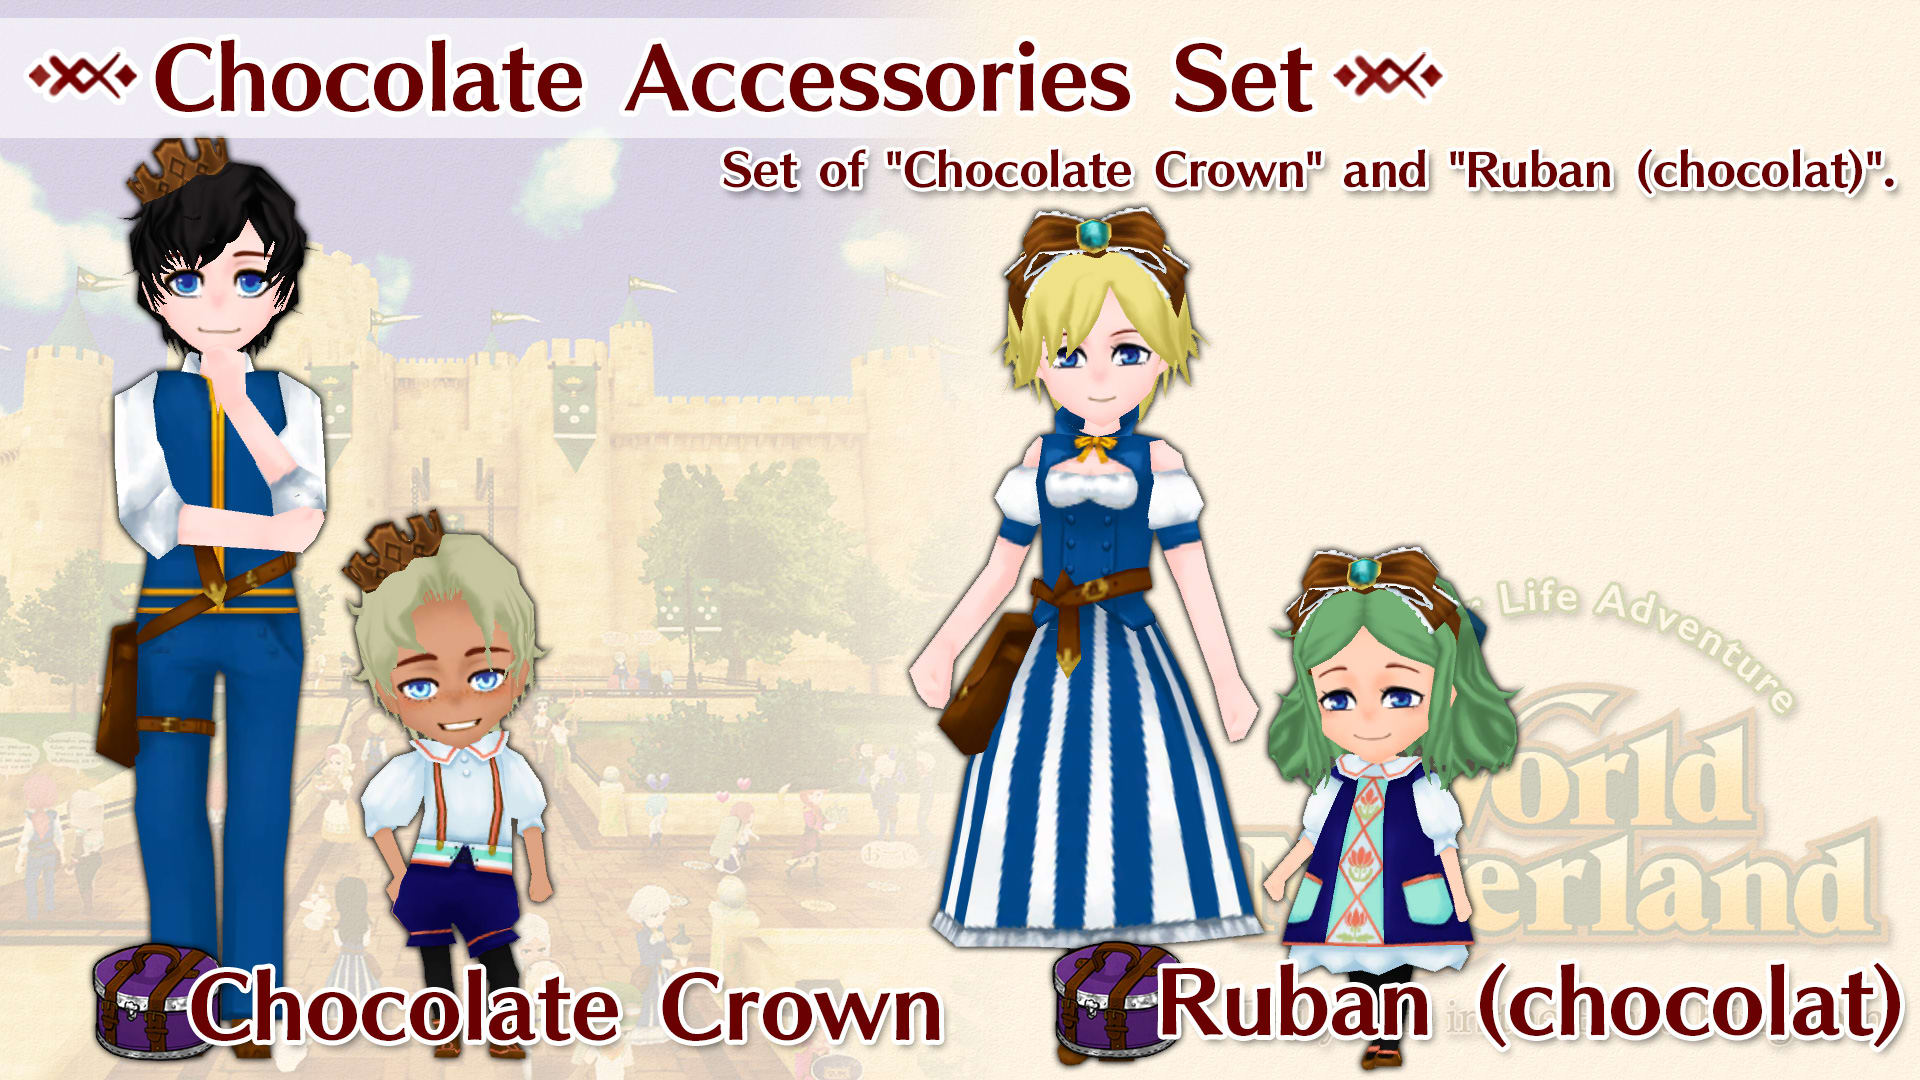 Chocolate Accessories Set